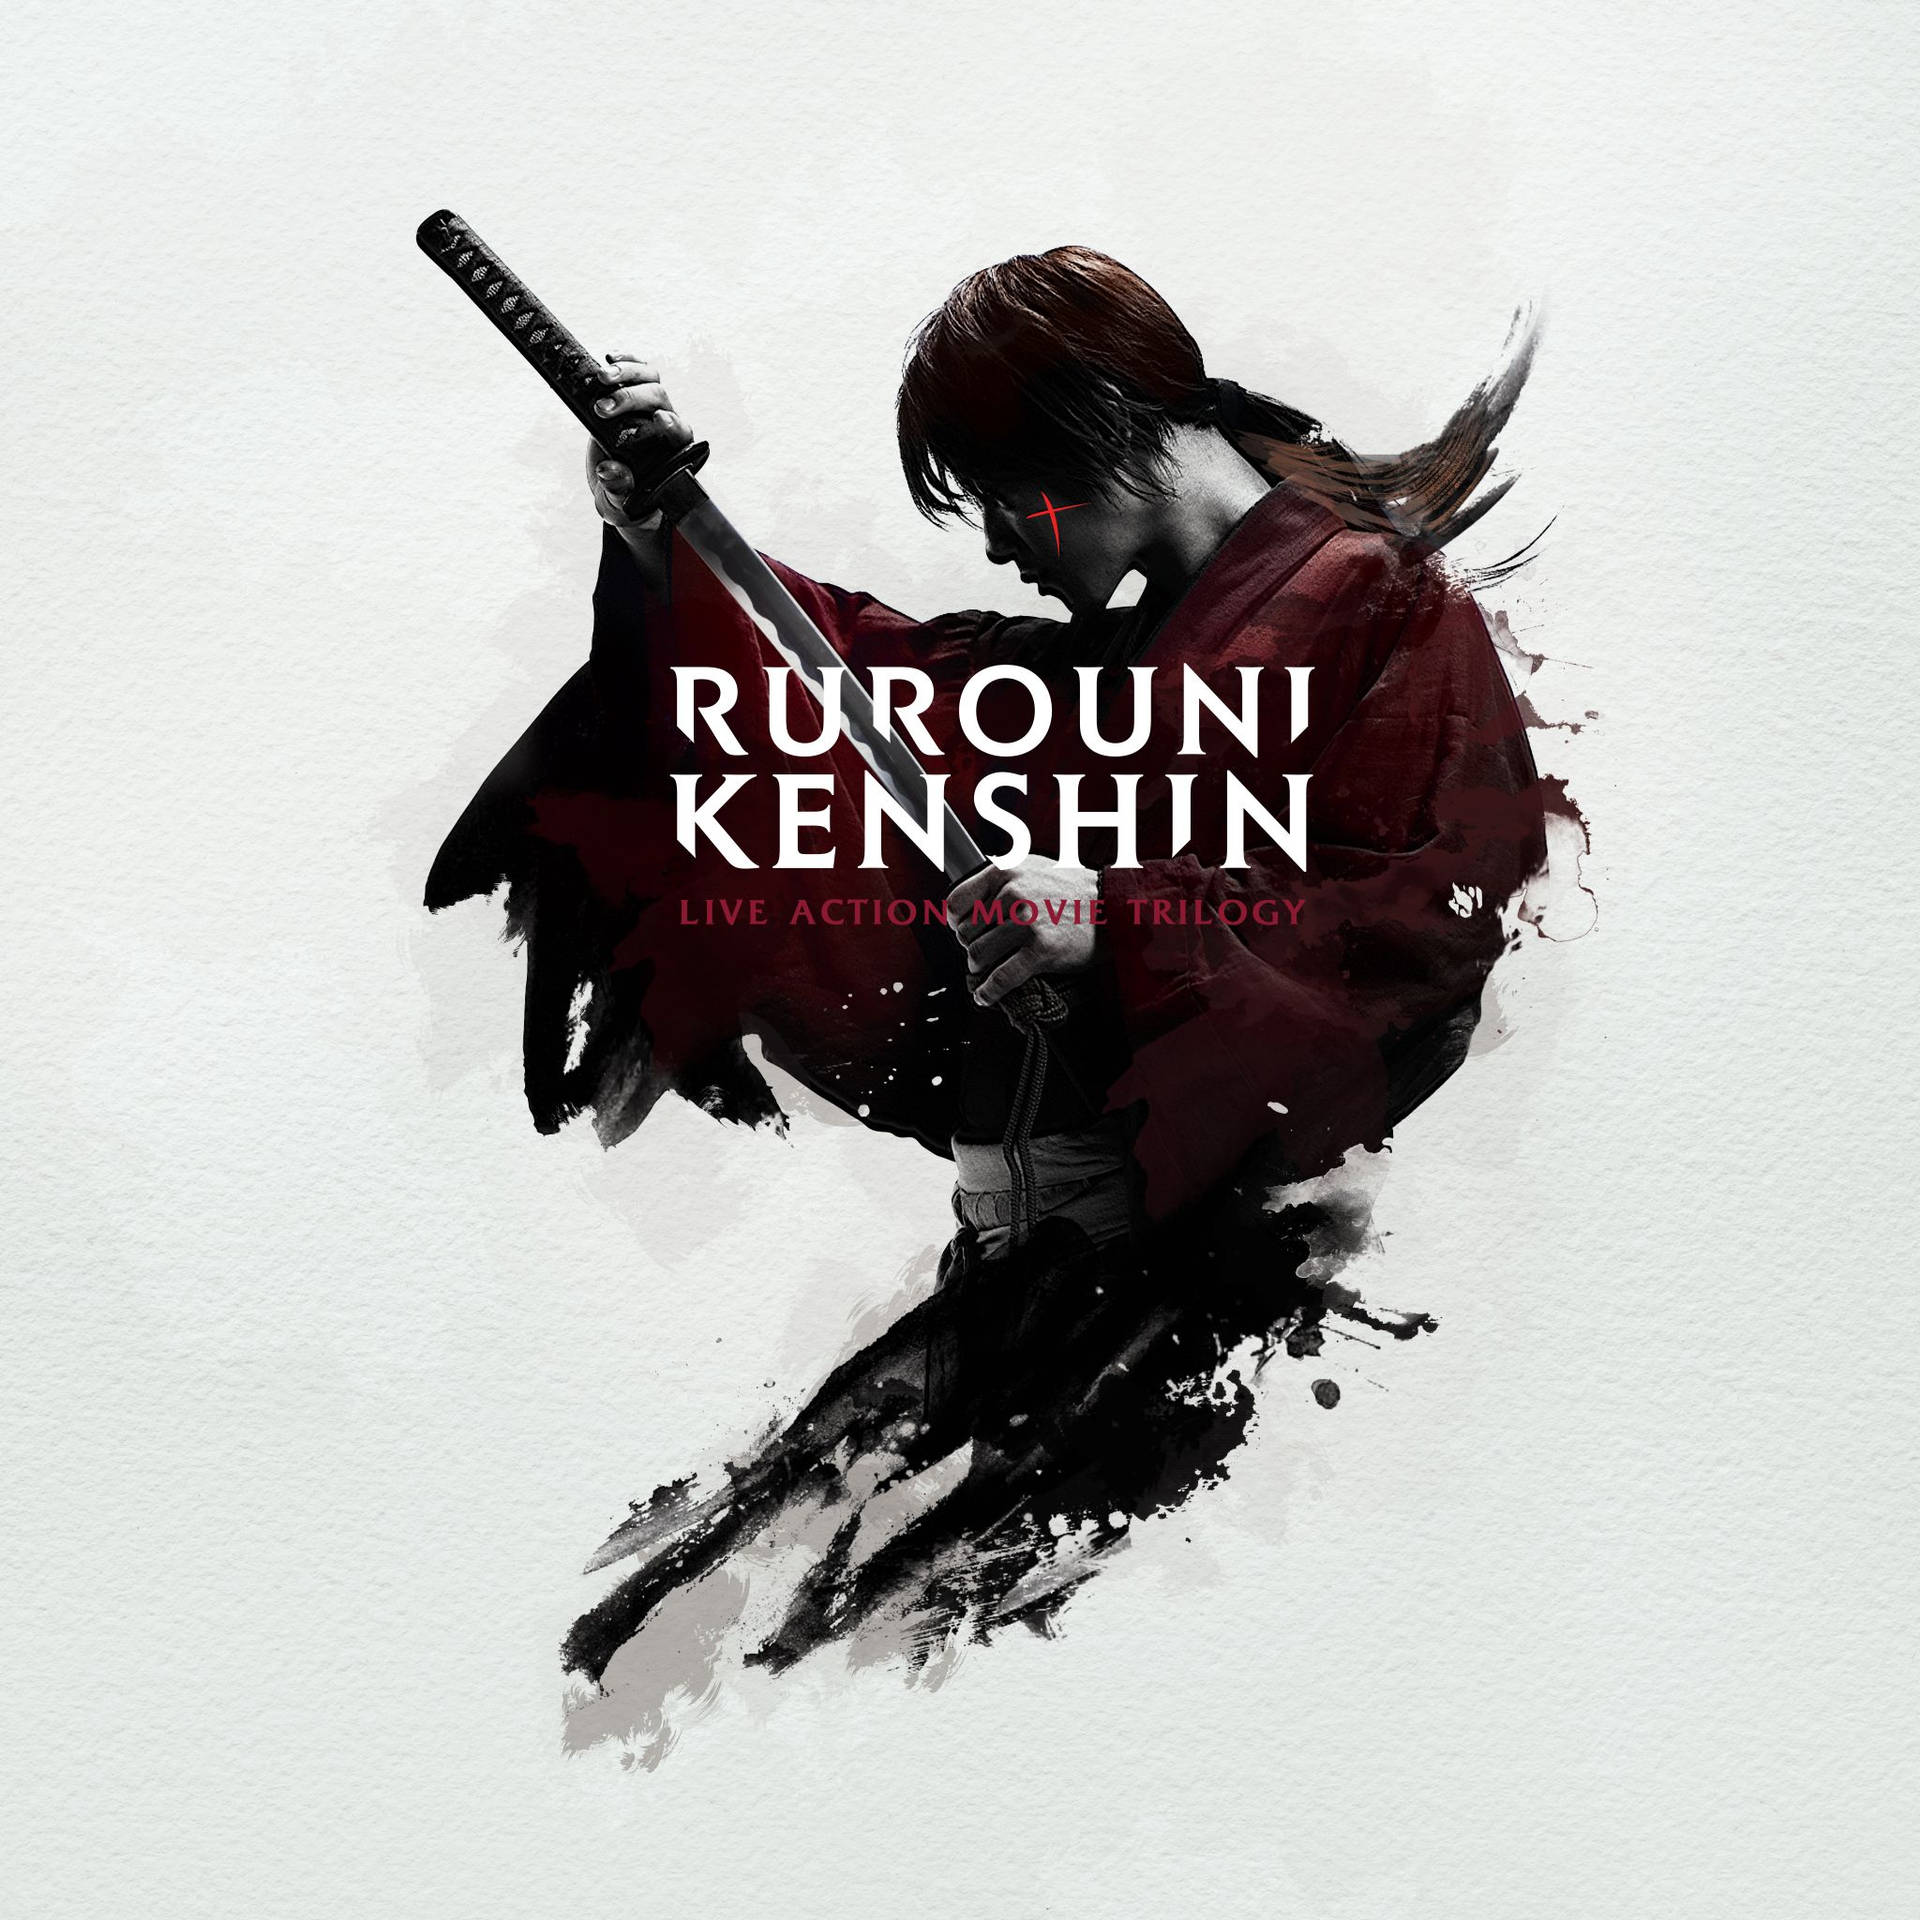 Posterda Trilogia De Filmes Rurouni Kenshin. Papel de Parede